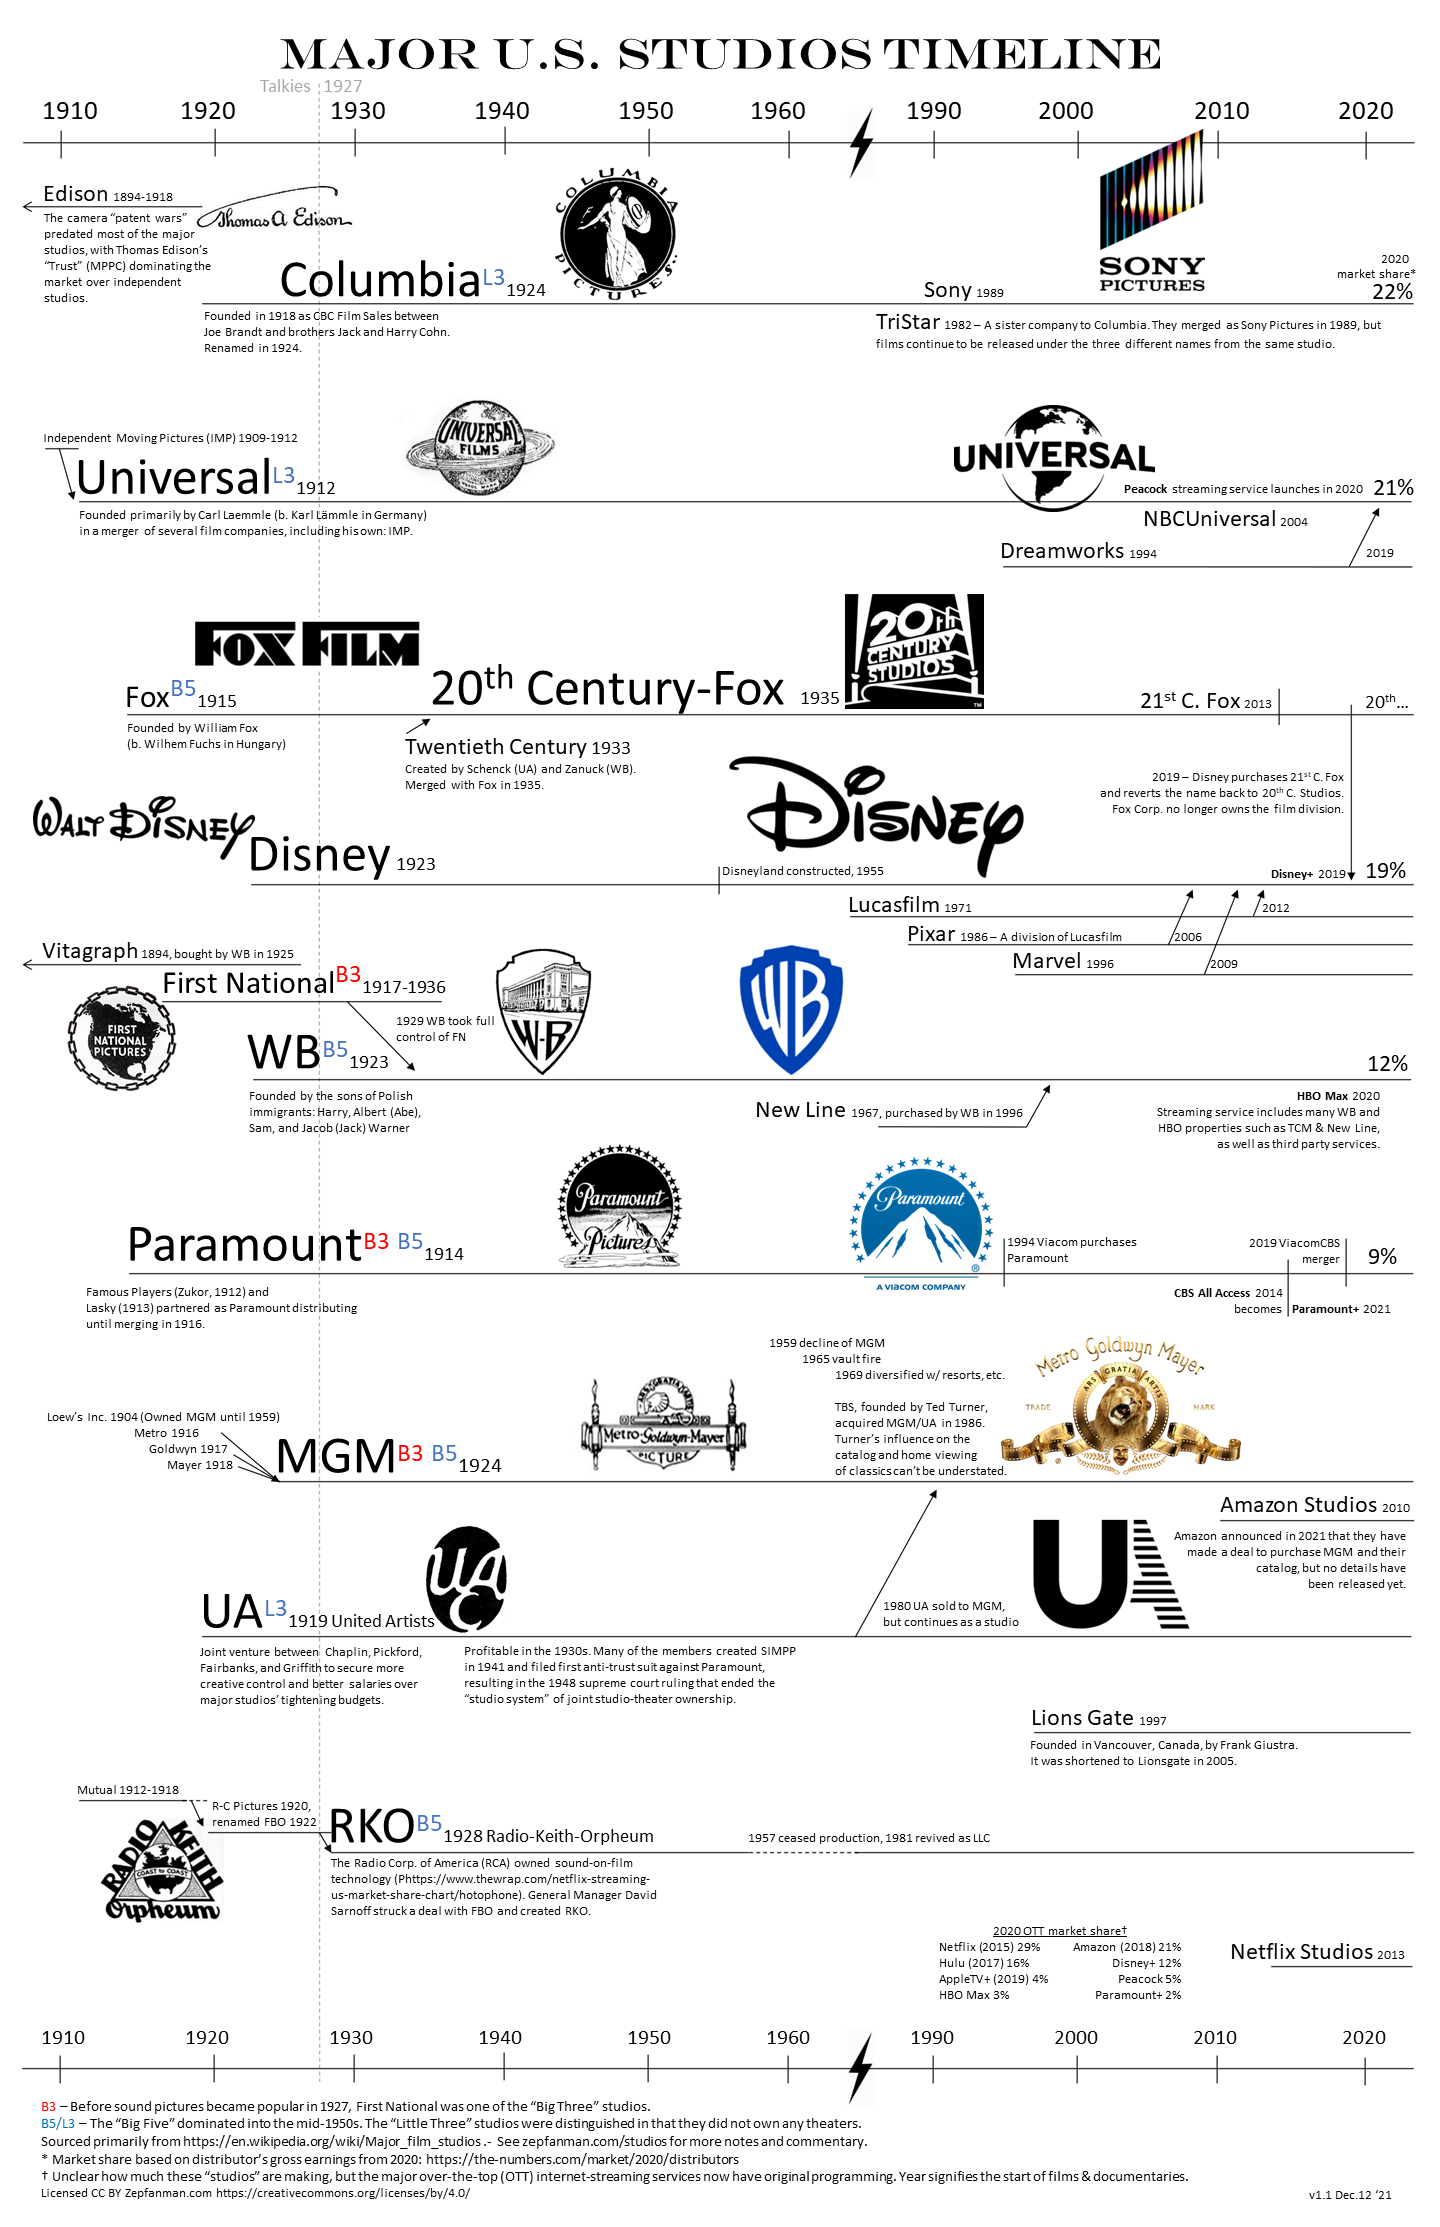 Major Hollywood Studios Timeline:
20th Century Studios, Disney, Lionsgate, MGM, Paramount, RKO, United Artists, Universal, studio, film, history, logo, movies, timeline, family tree, Hollywood, infographic